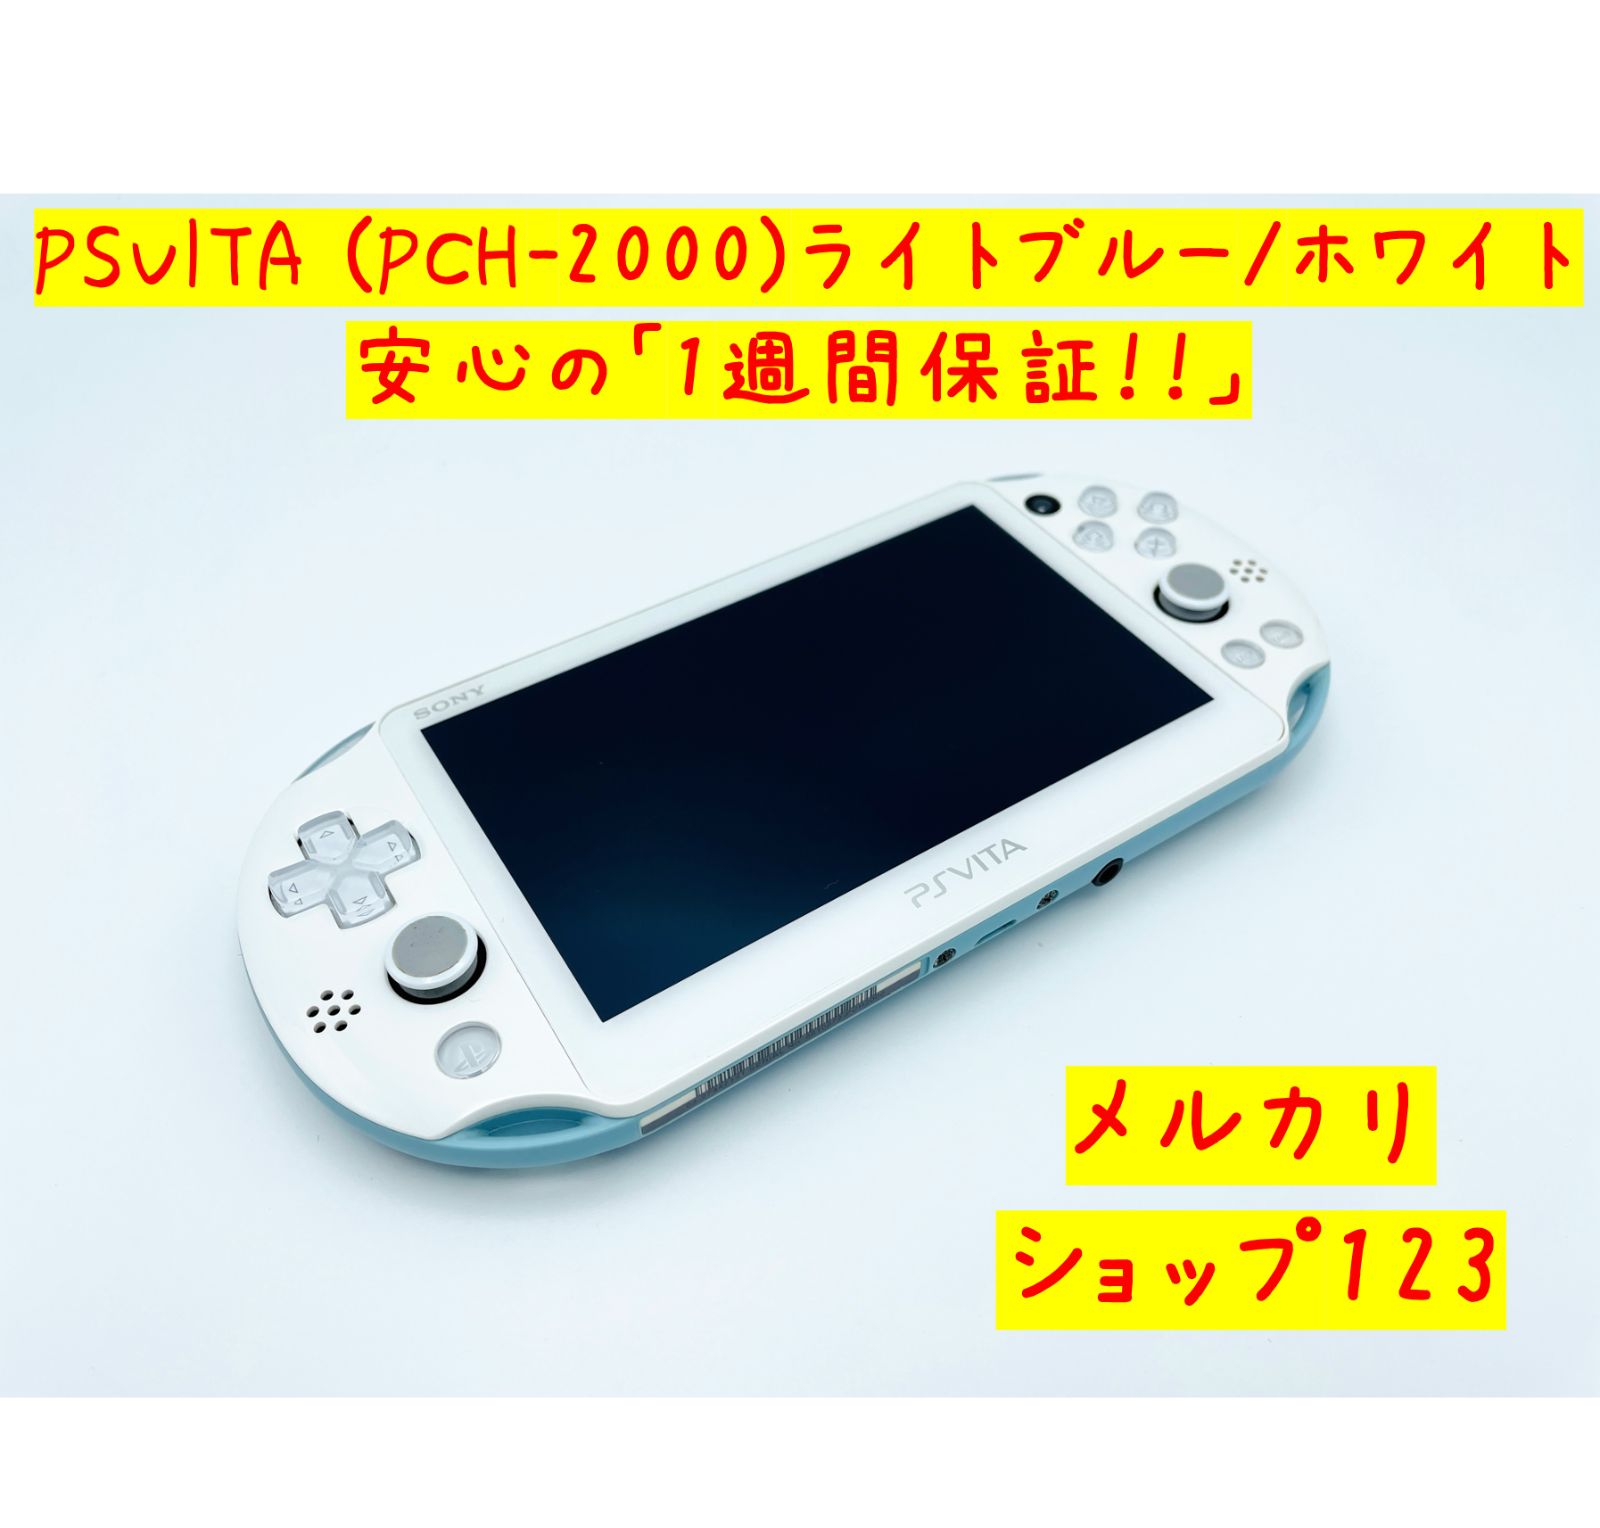 PSVITA 本体 Wi-Fiモデル ライトブルー/ホワイト PCH-2000 - 【イン ...